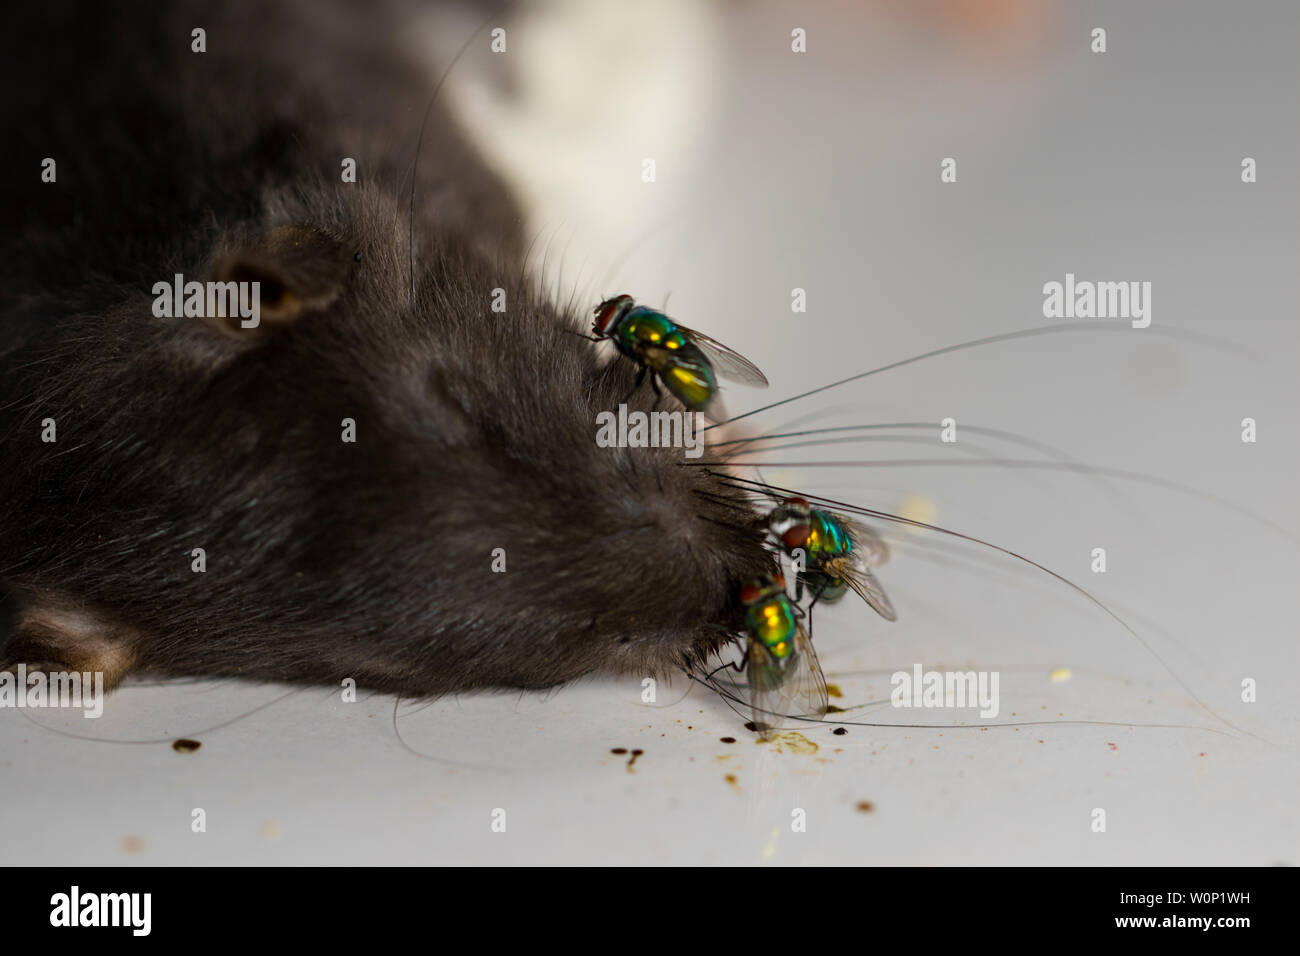 Tote Ratte mit Fliegen Zersetzung Stockfoto